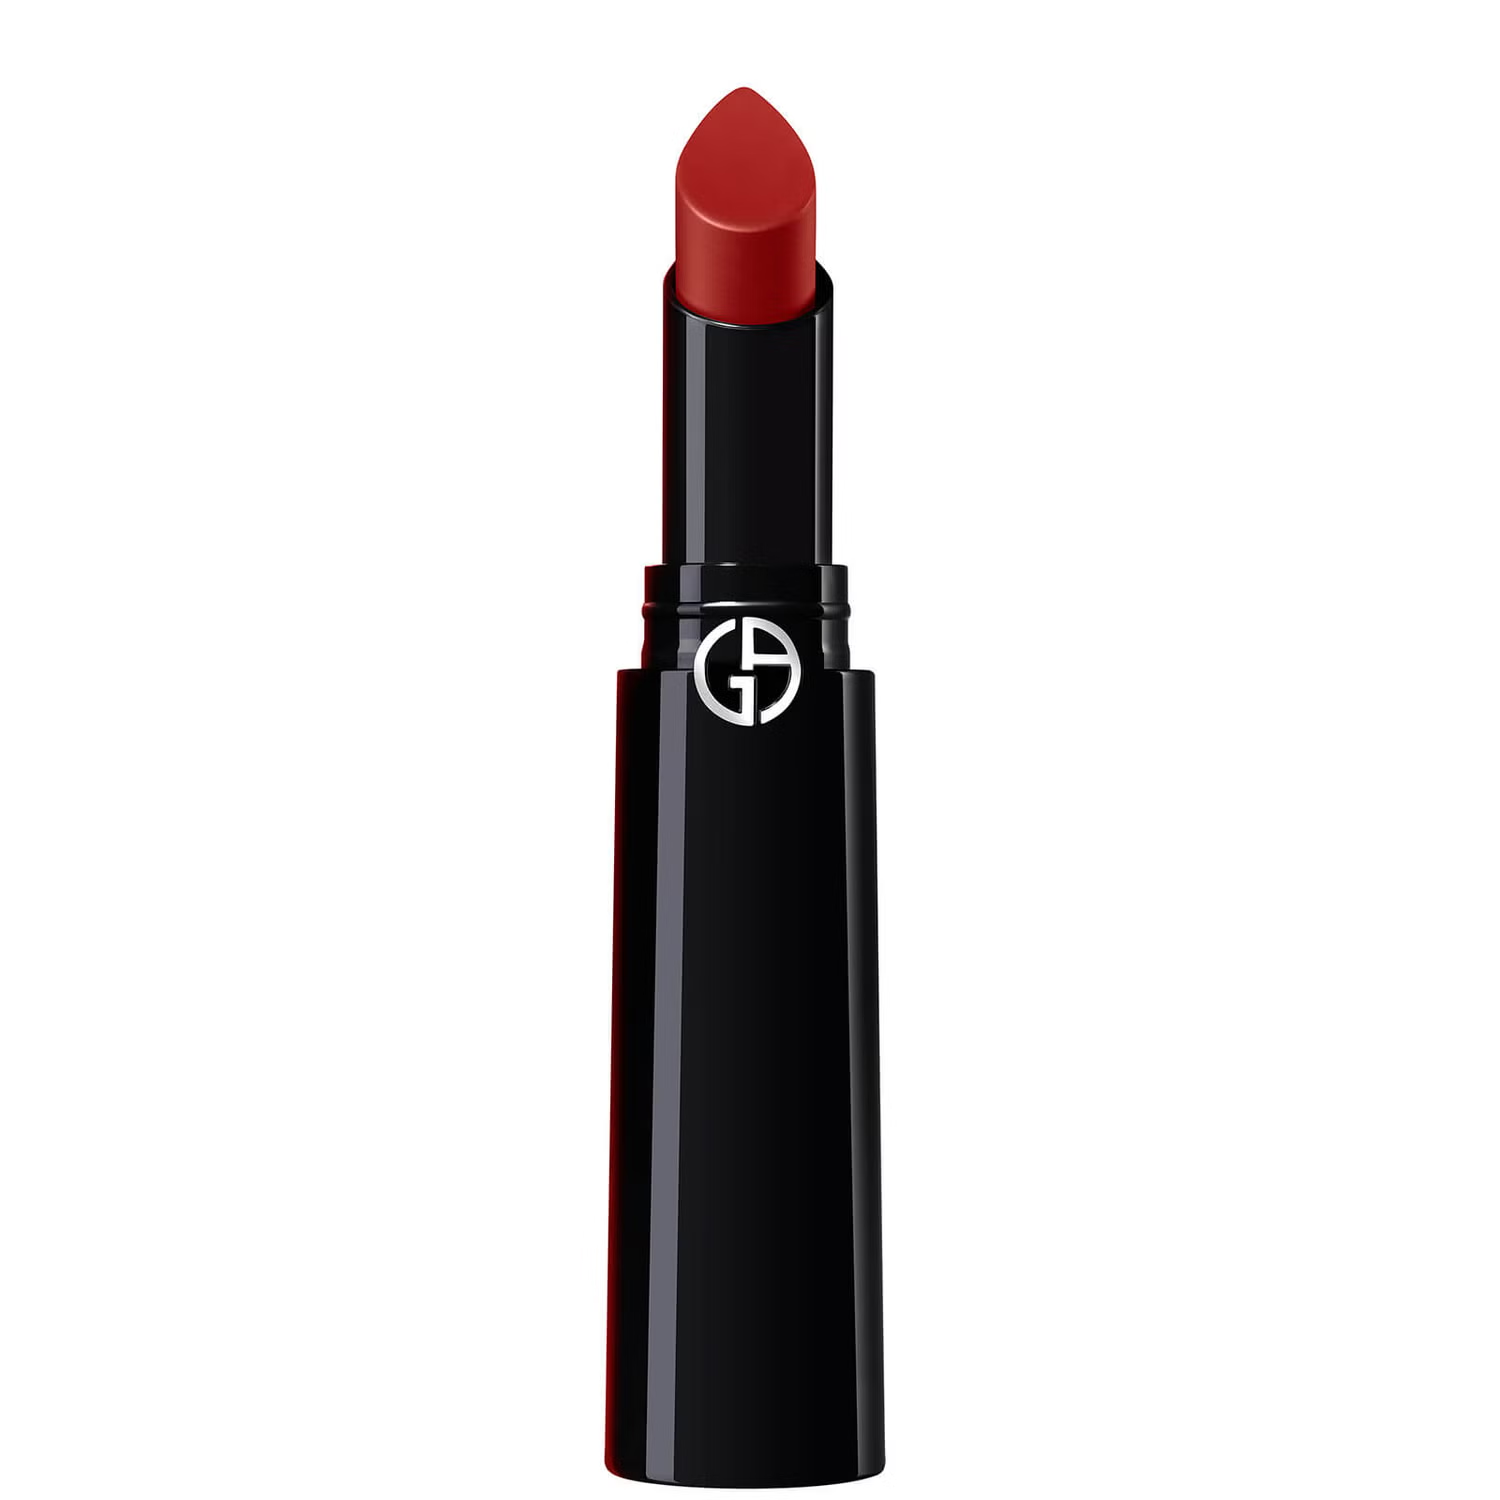 Unleash Your Festive Sparkle: Armani Lip Power - The Ultimate Red Lipstick for the Christmas Season